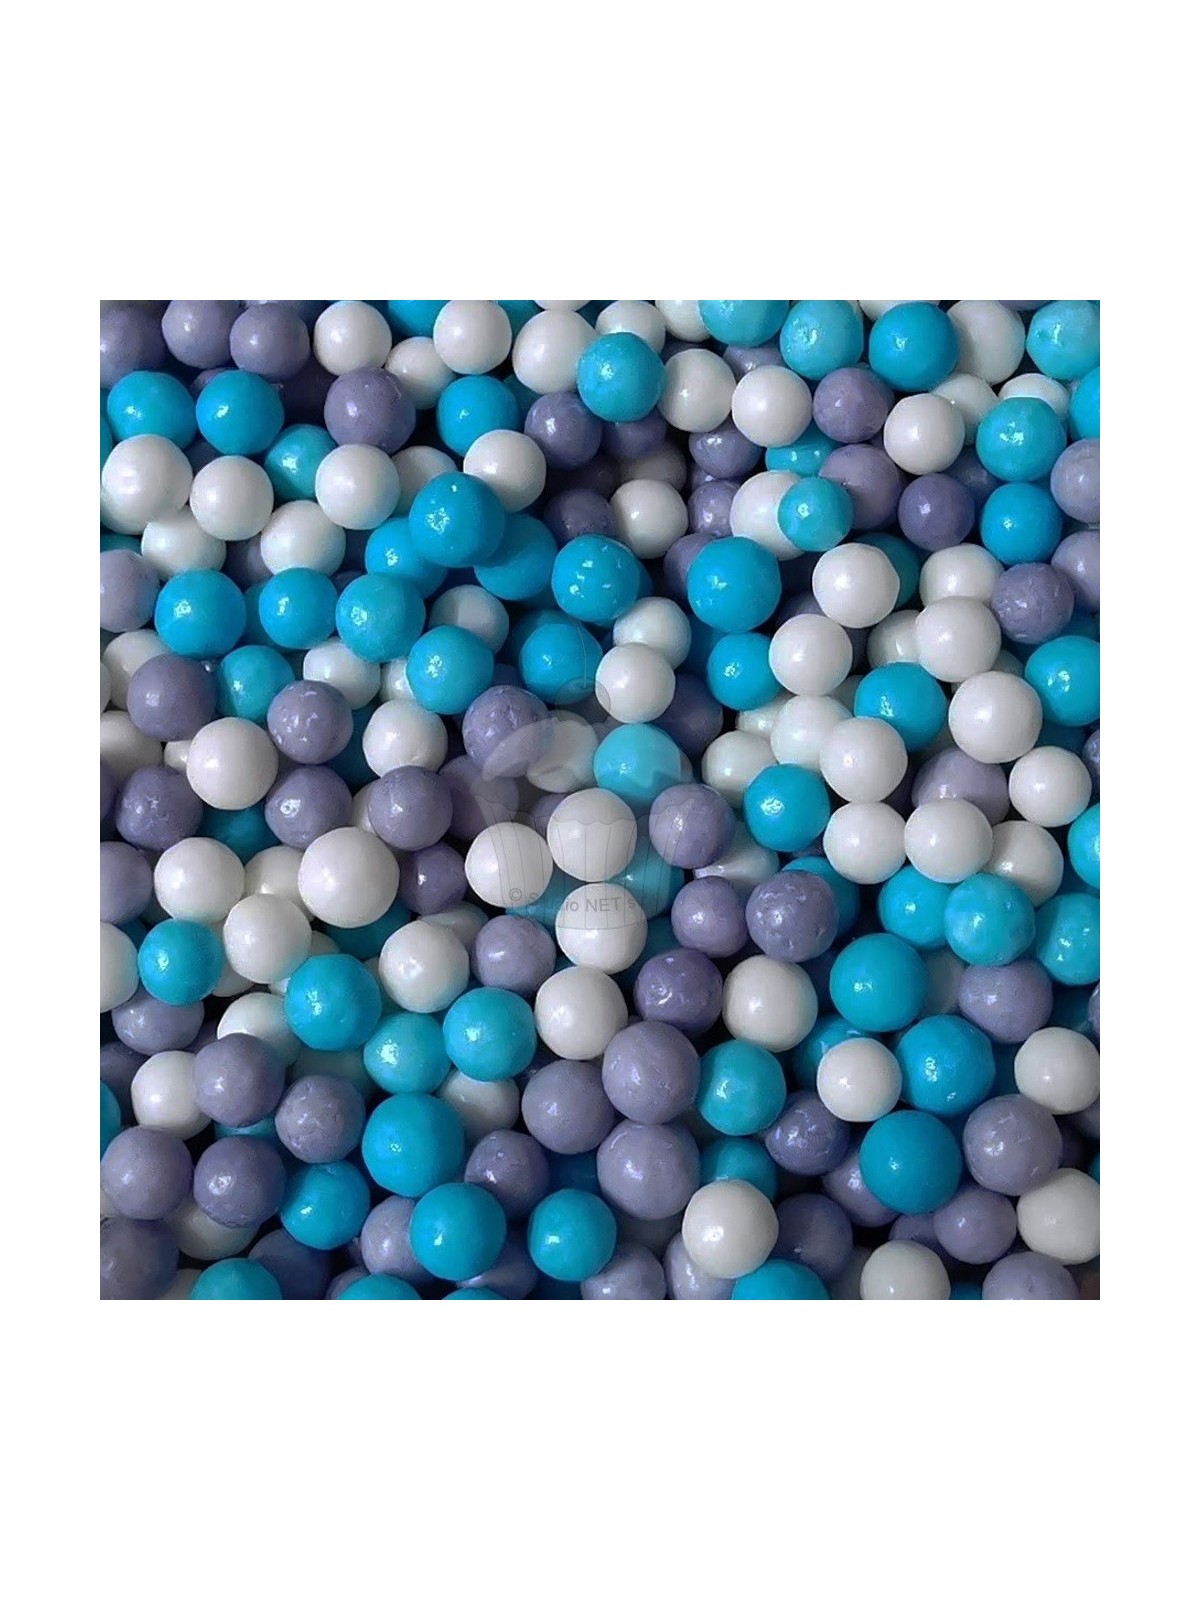 Sugar pearls - Elsa - blue/white/lilac - 50g